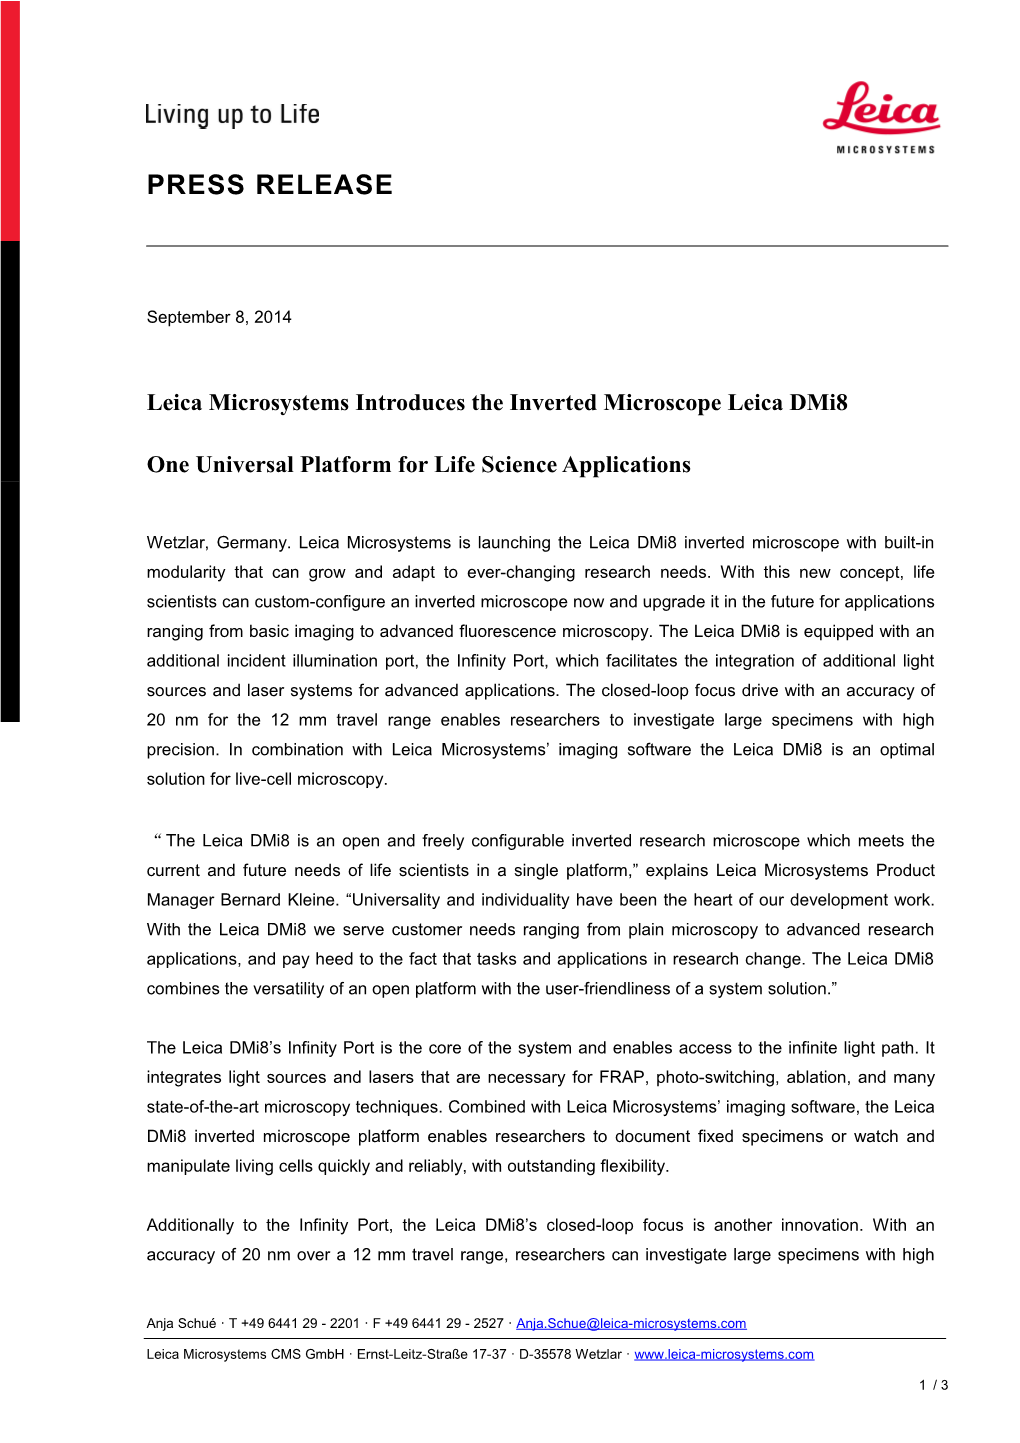 Leica Microsystems Press Release s1